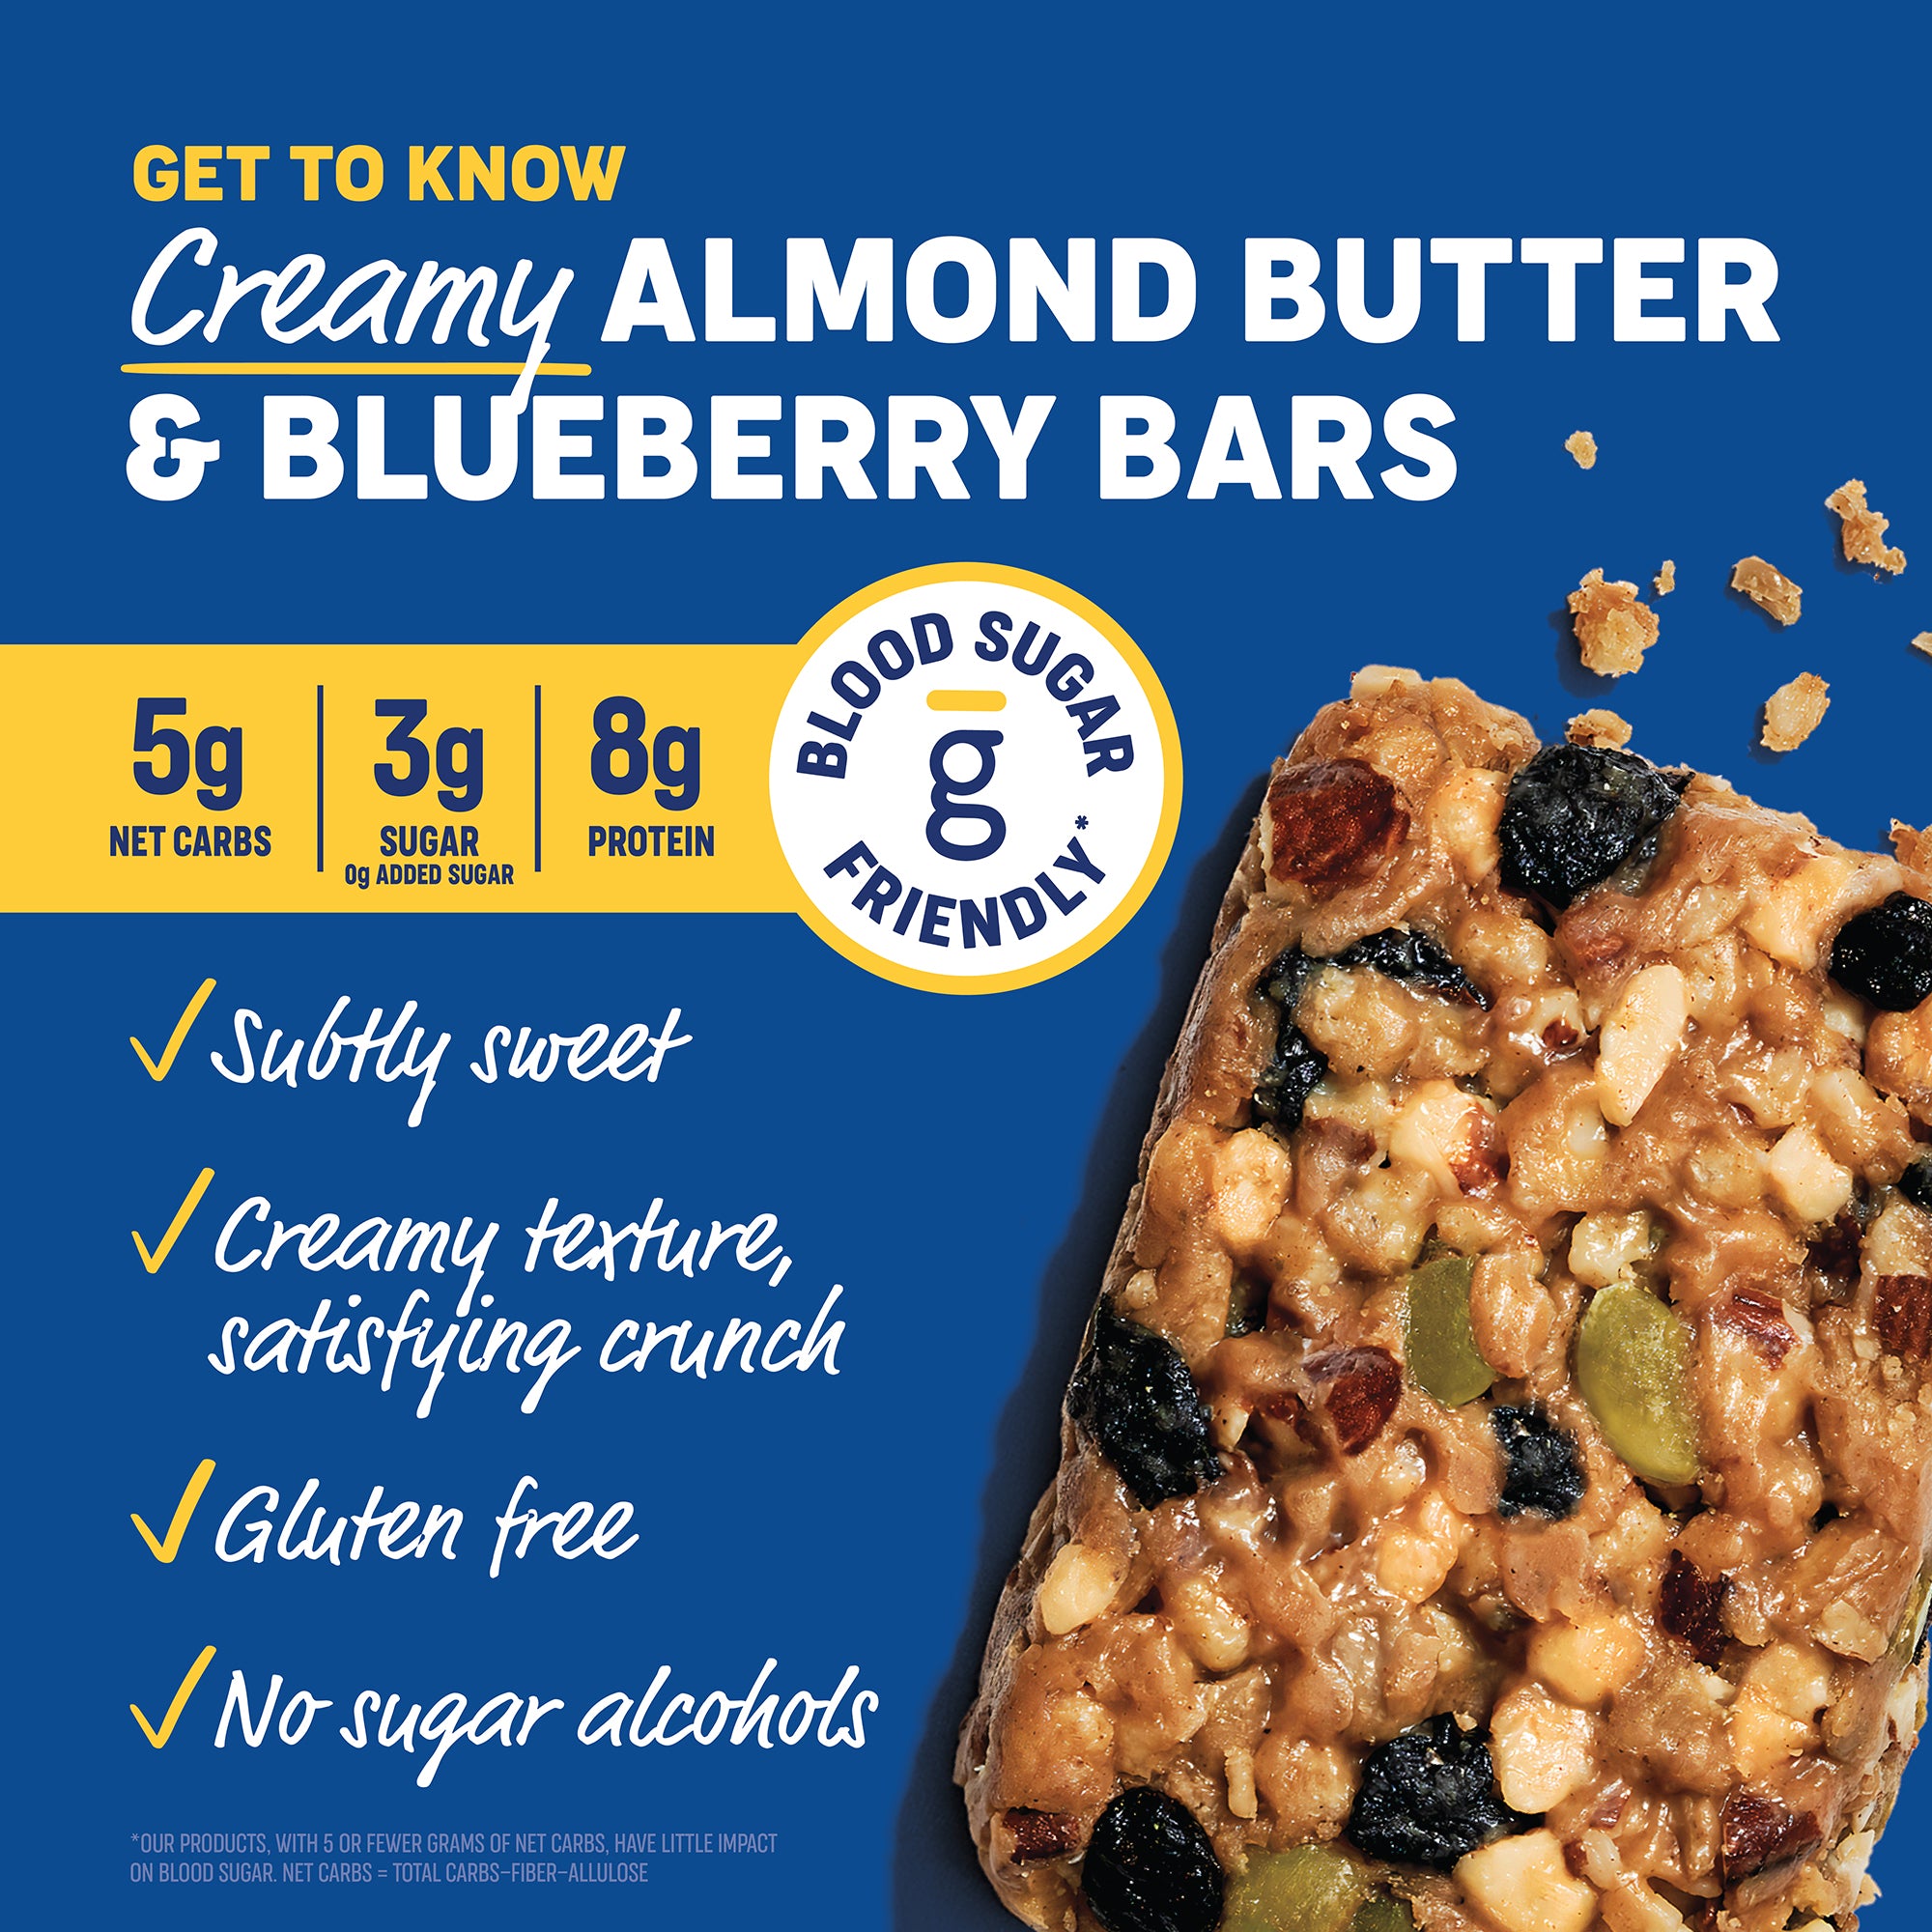 Thumnbail 3 of 6, description: Almond Butter & Blueberry